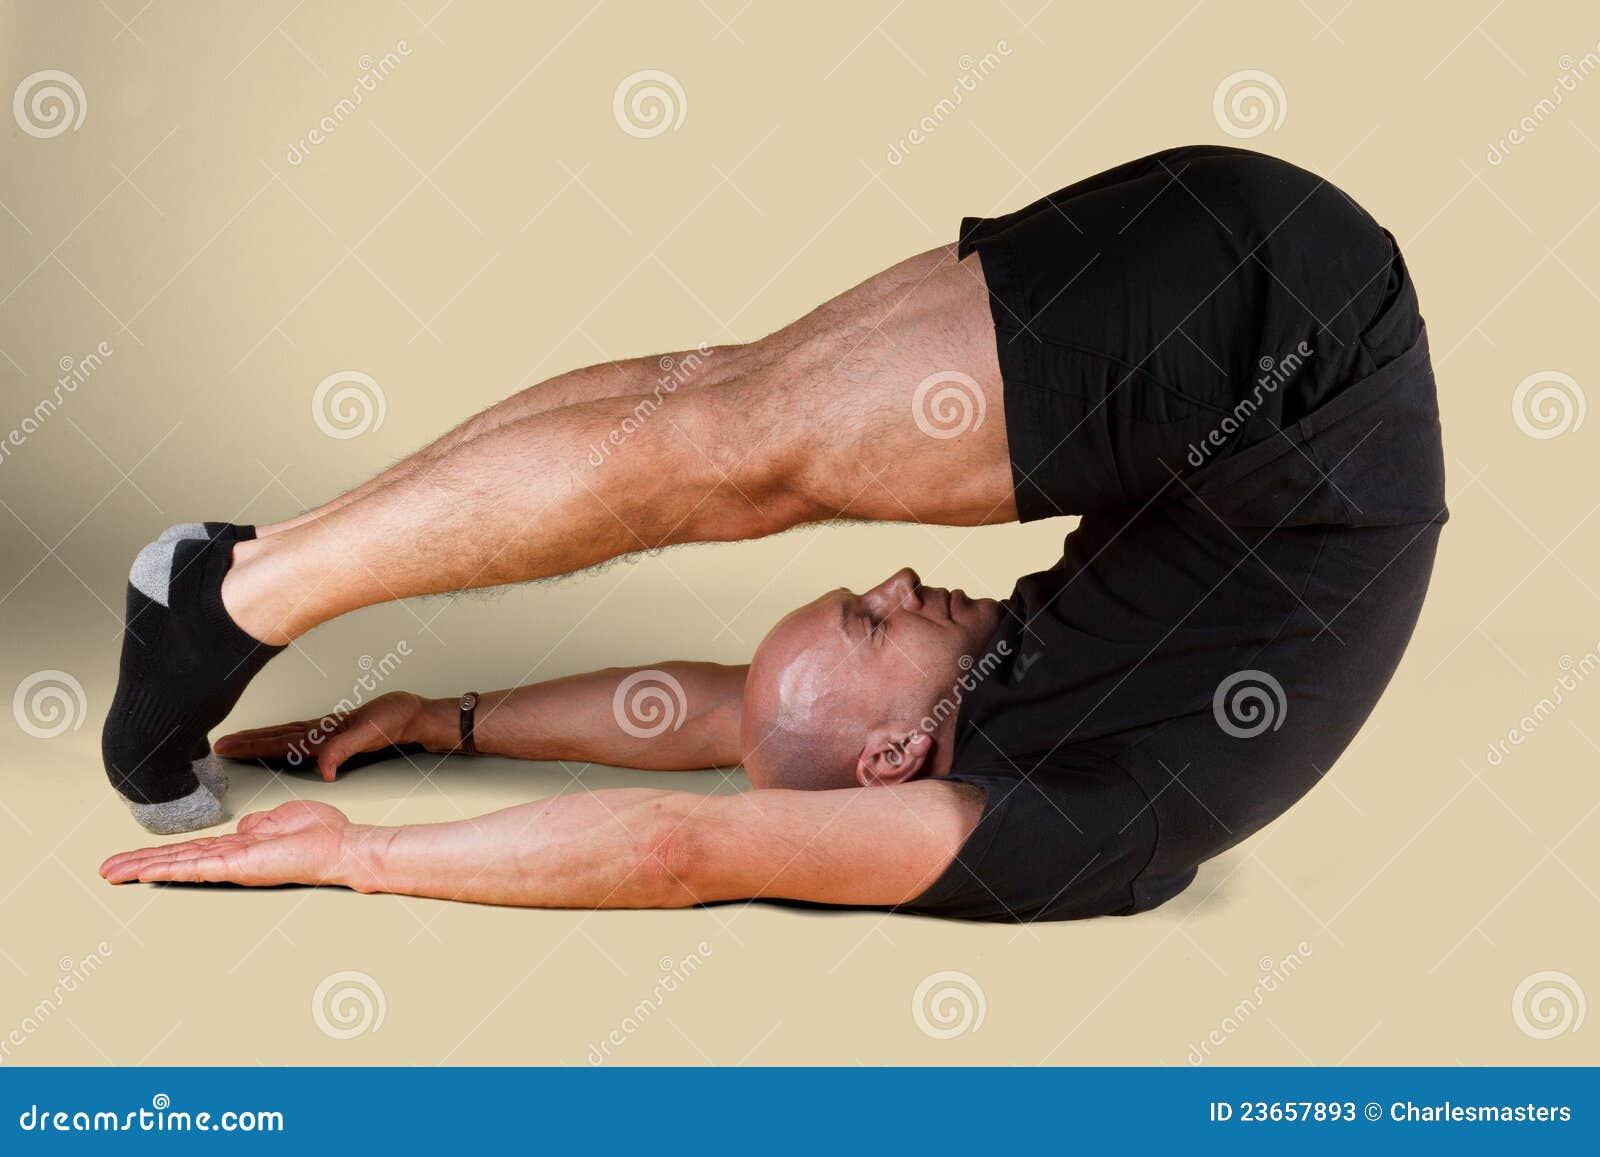 Pilates Position - Jack Knife Stock Image - Image of body, workout: 23657893